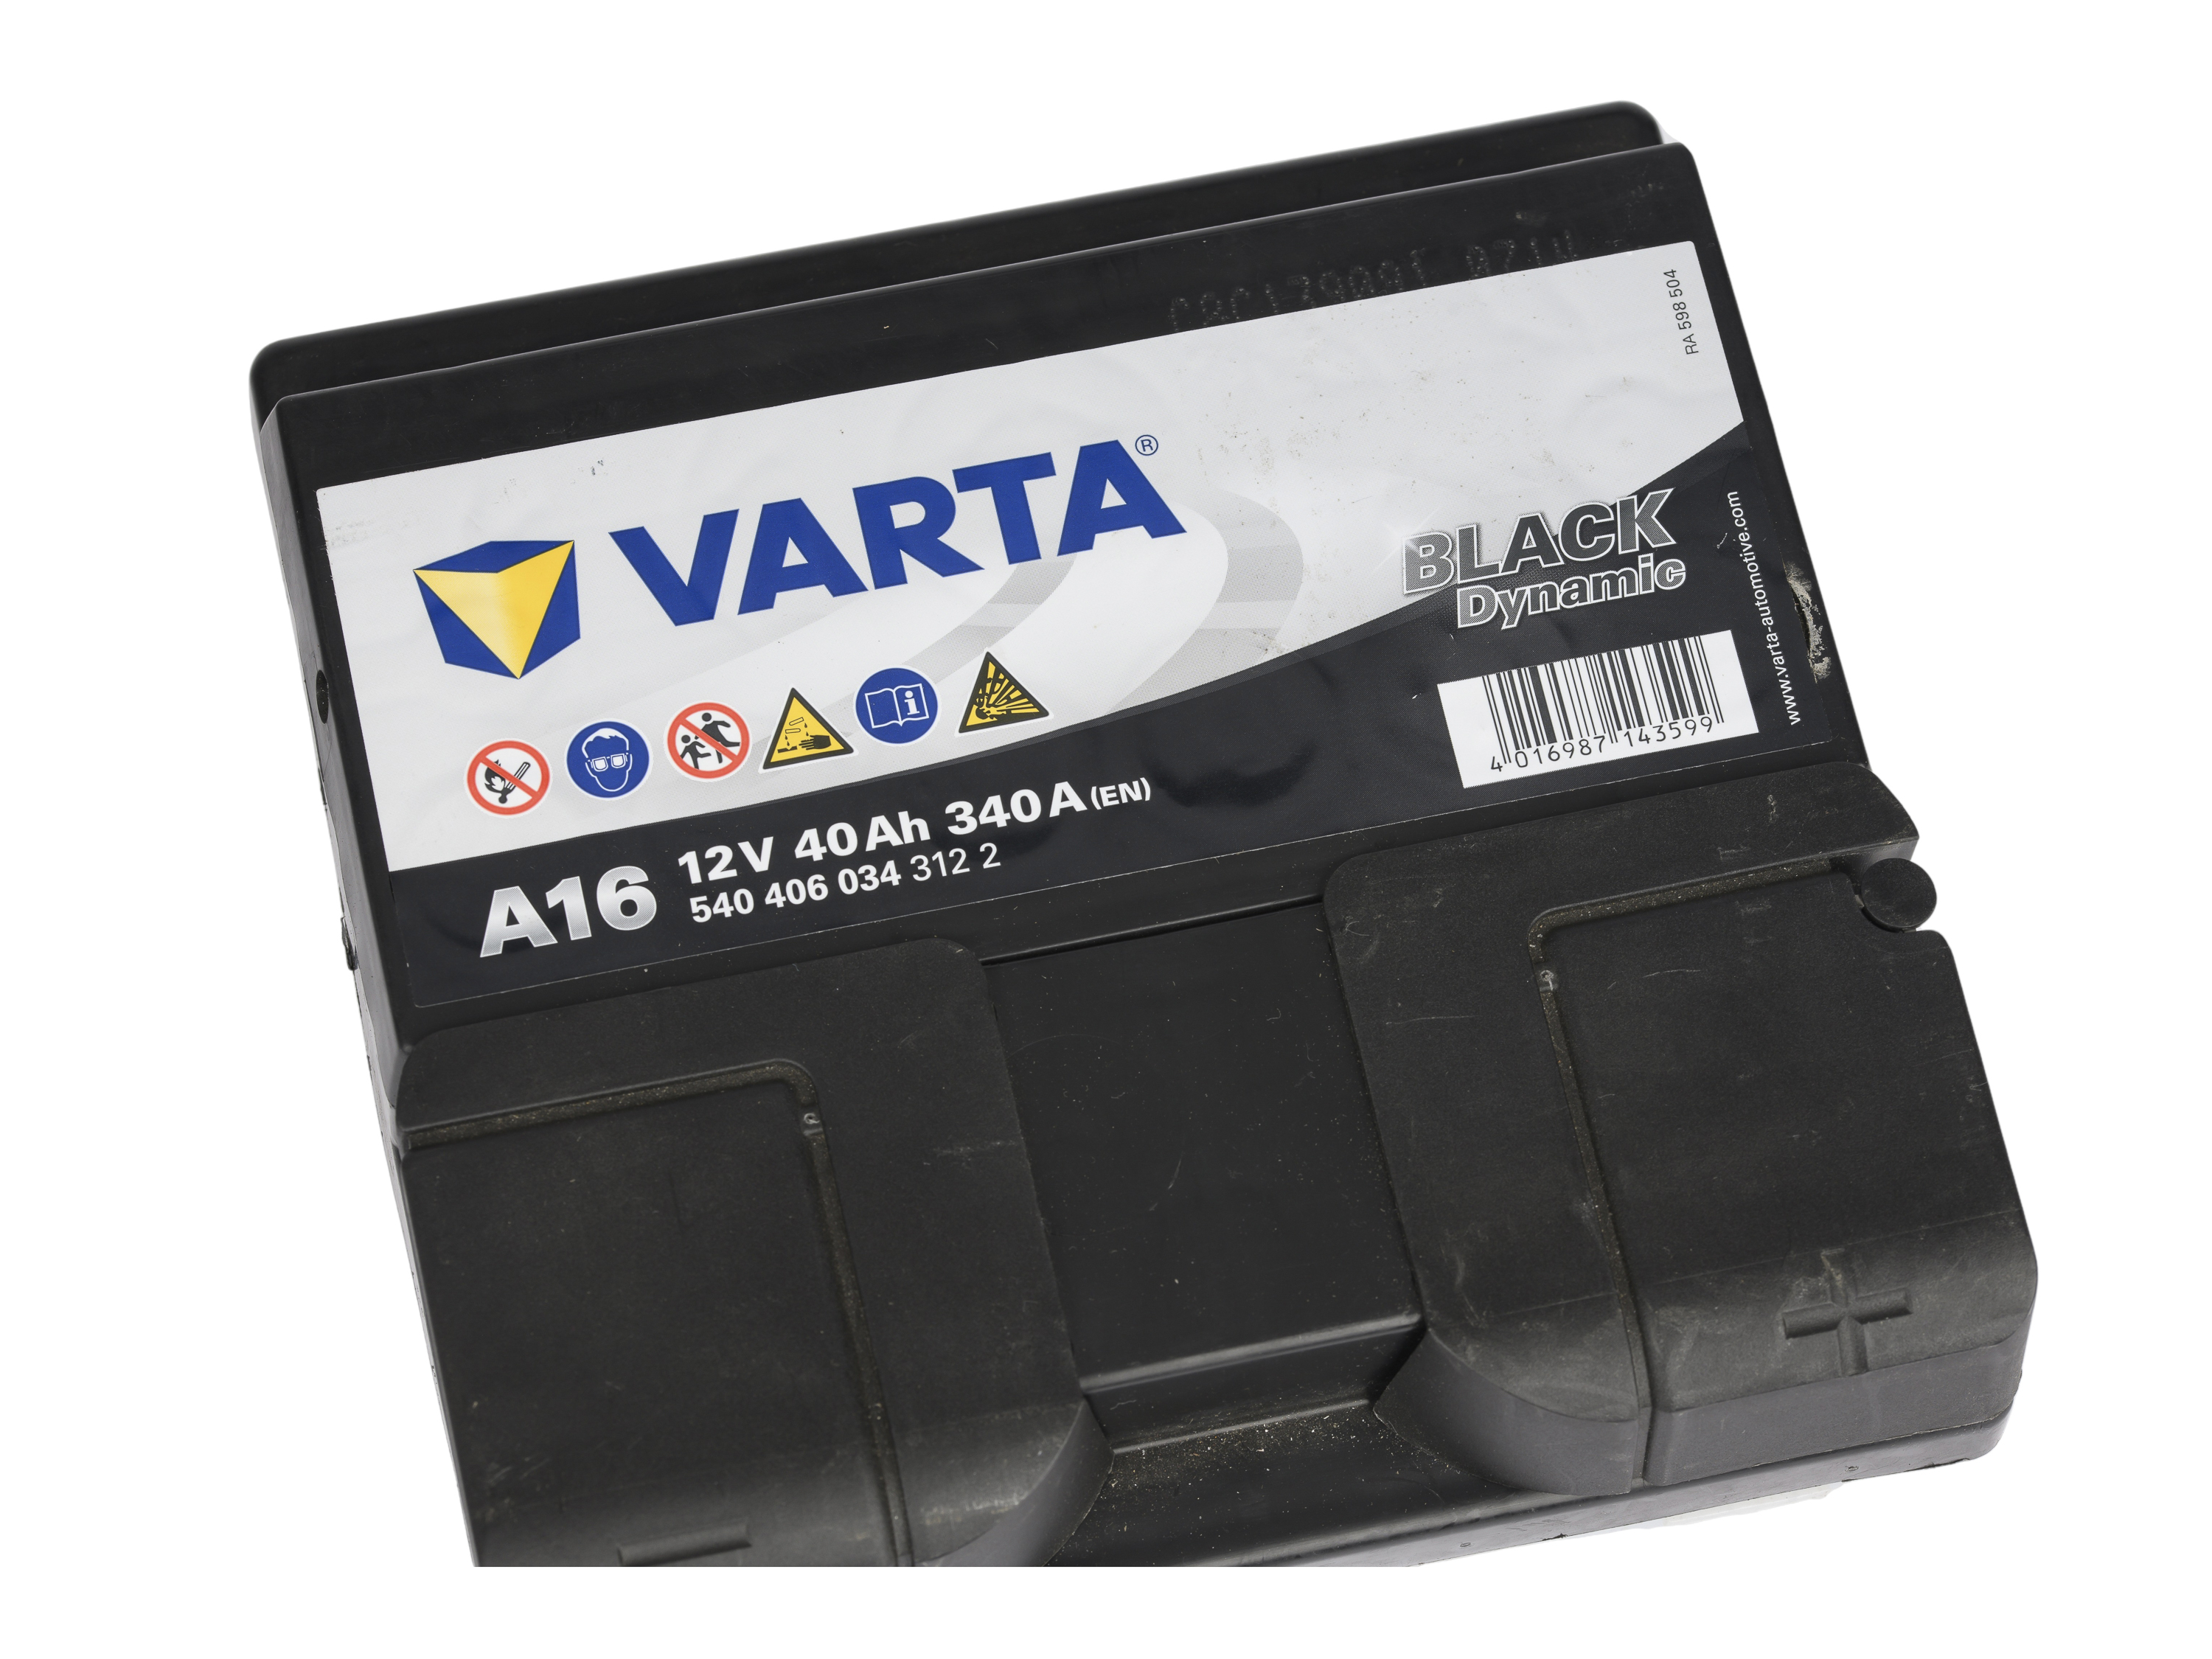 VARTA Battery Black Dynamic A16  - 12V/40Ah - 540.406.034